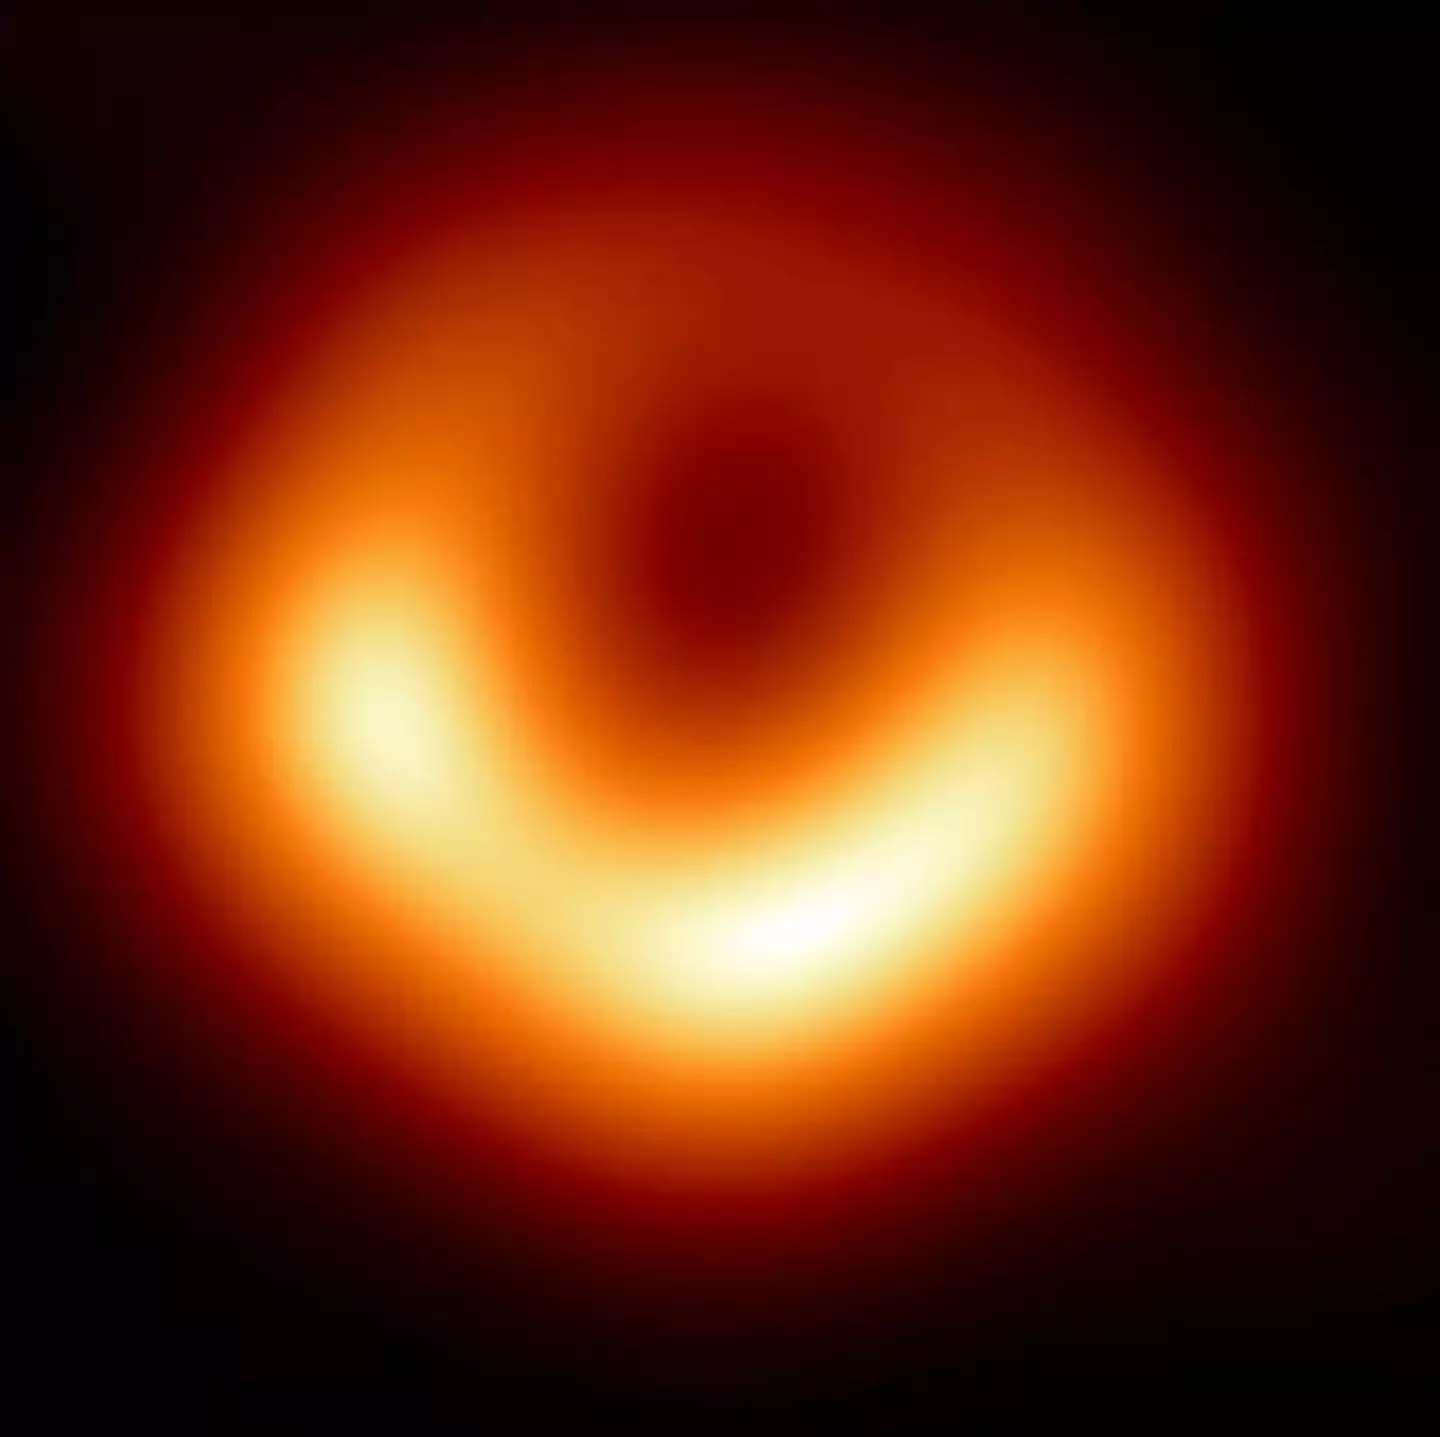 The original image of the M87 black hole.